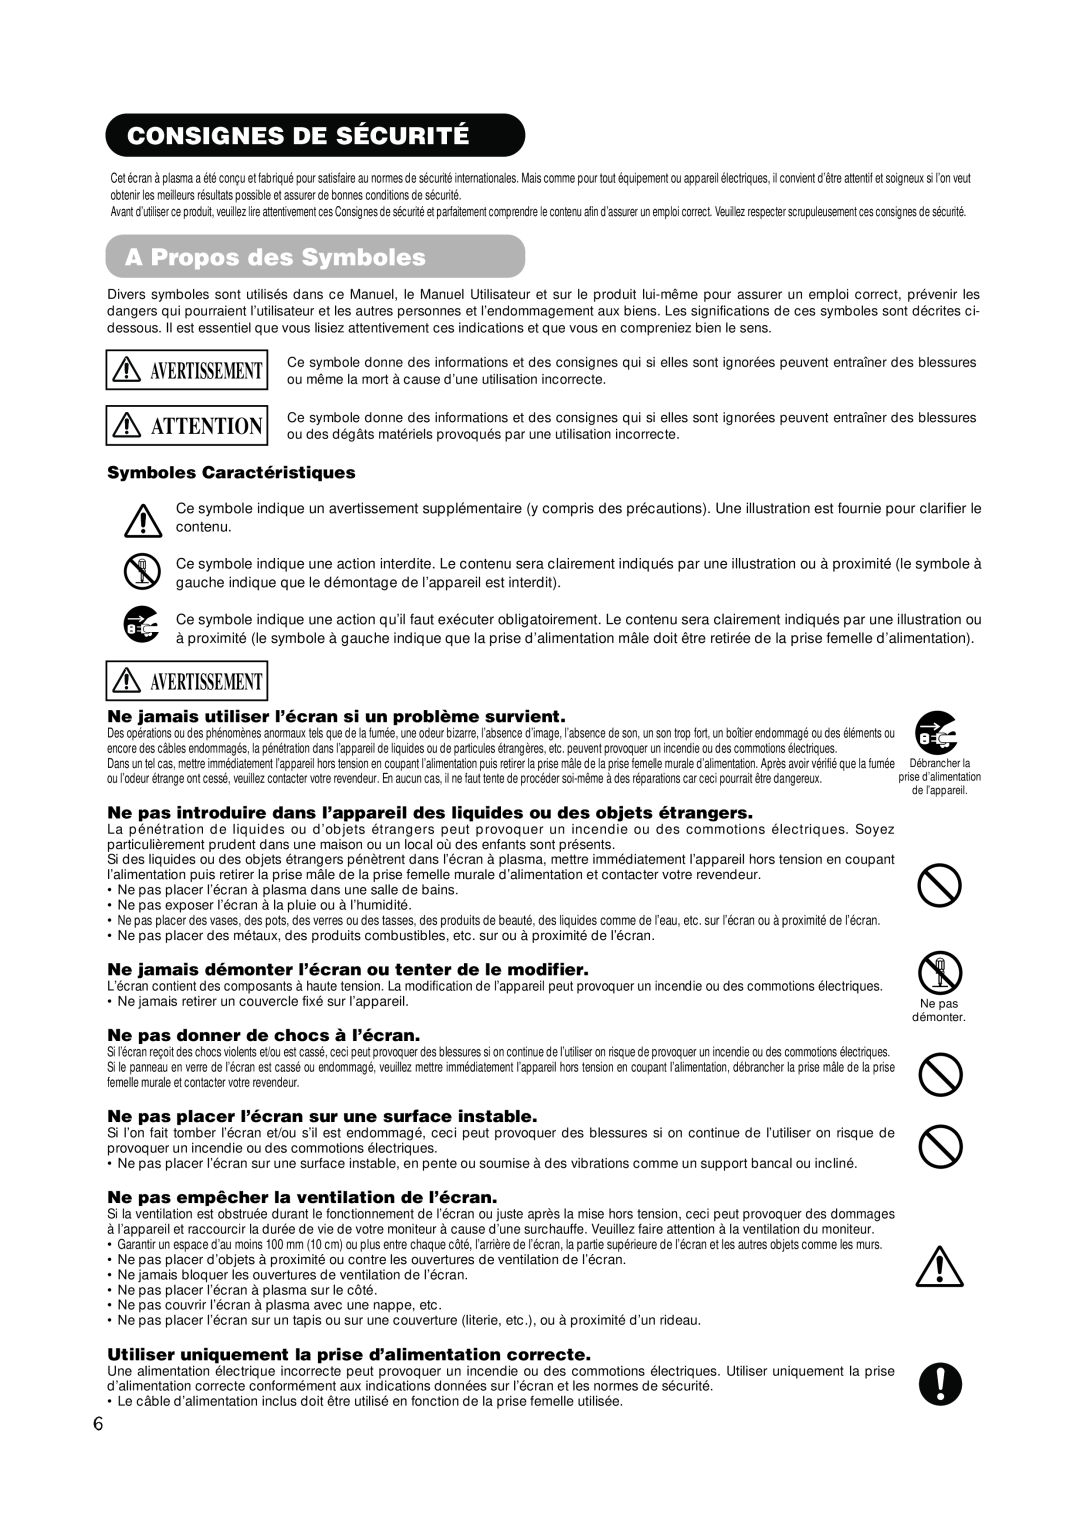 Hitachi PW1A user manual Consignes De Sécurité, A Propos des Symboles, Avertissement, Symboles Caractéristiques 